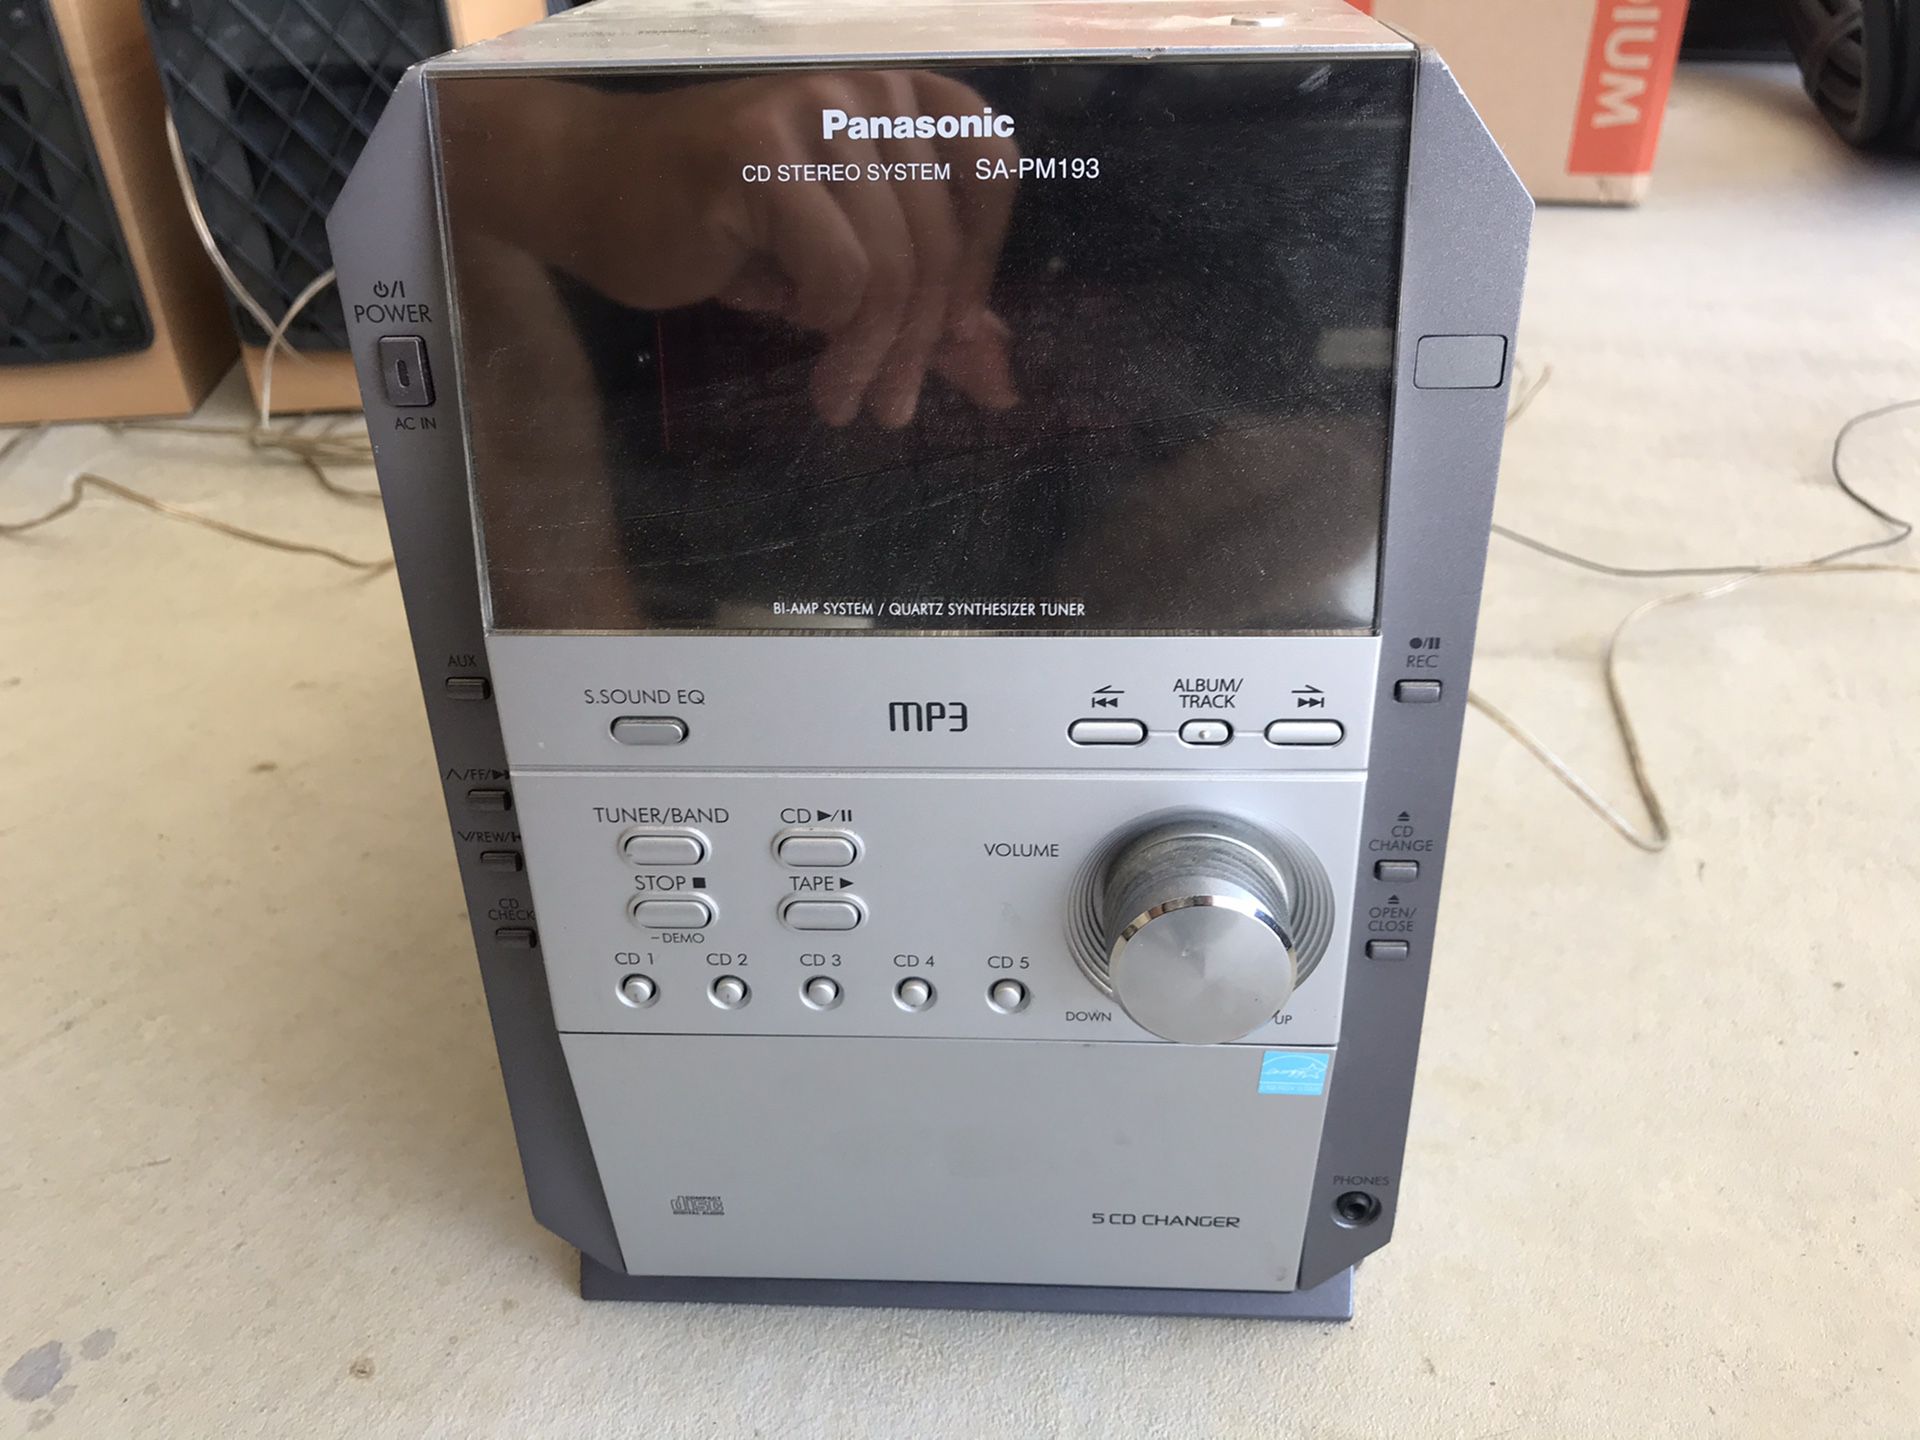 Panasonic CD Stereo System SA-PM193.